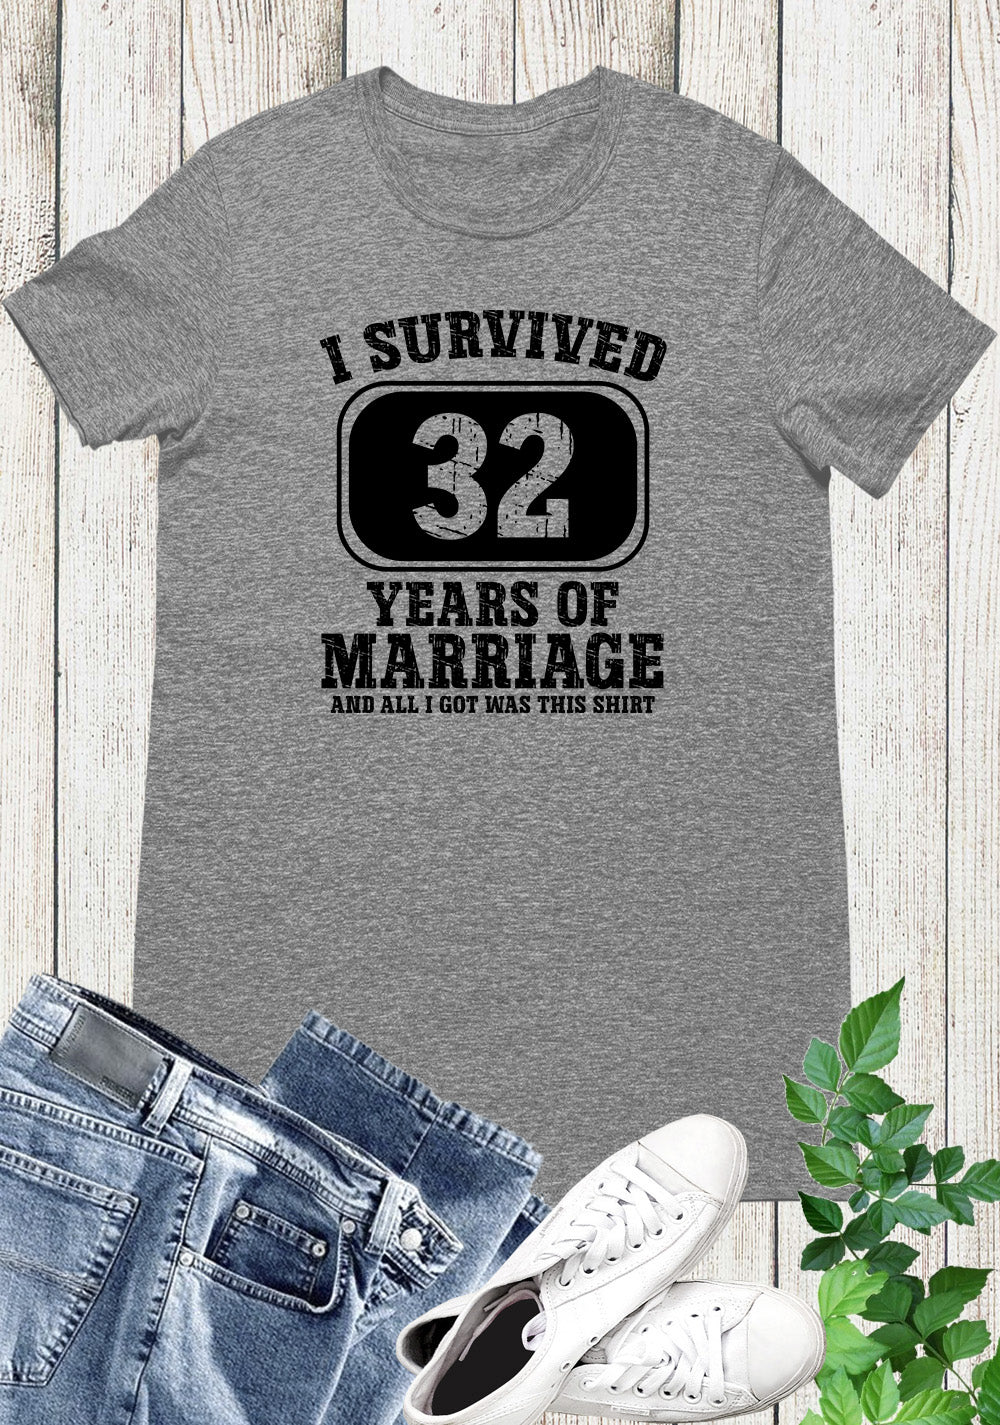 Wedding Anniversary t-shirts Custom